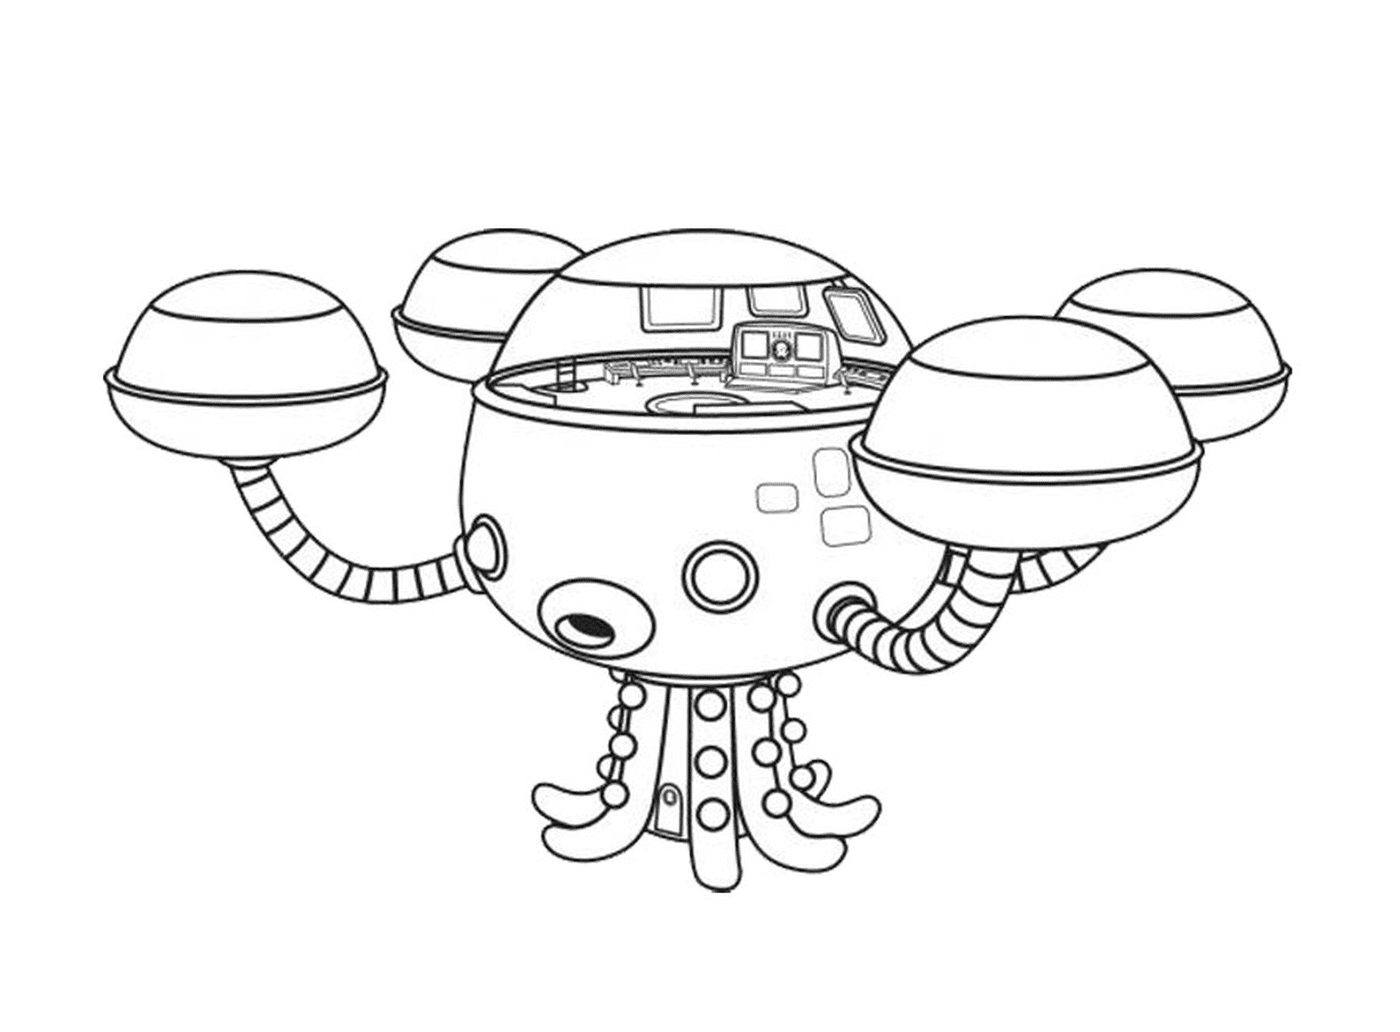  Octocapsule des octanauts, подводное приключение 